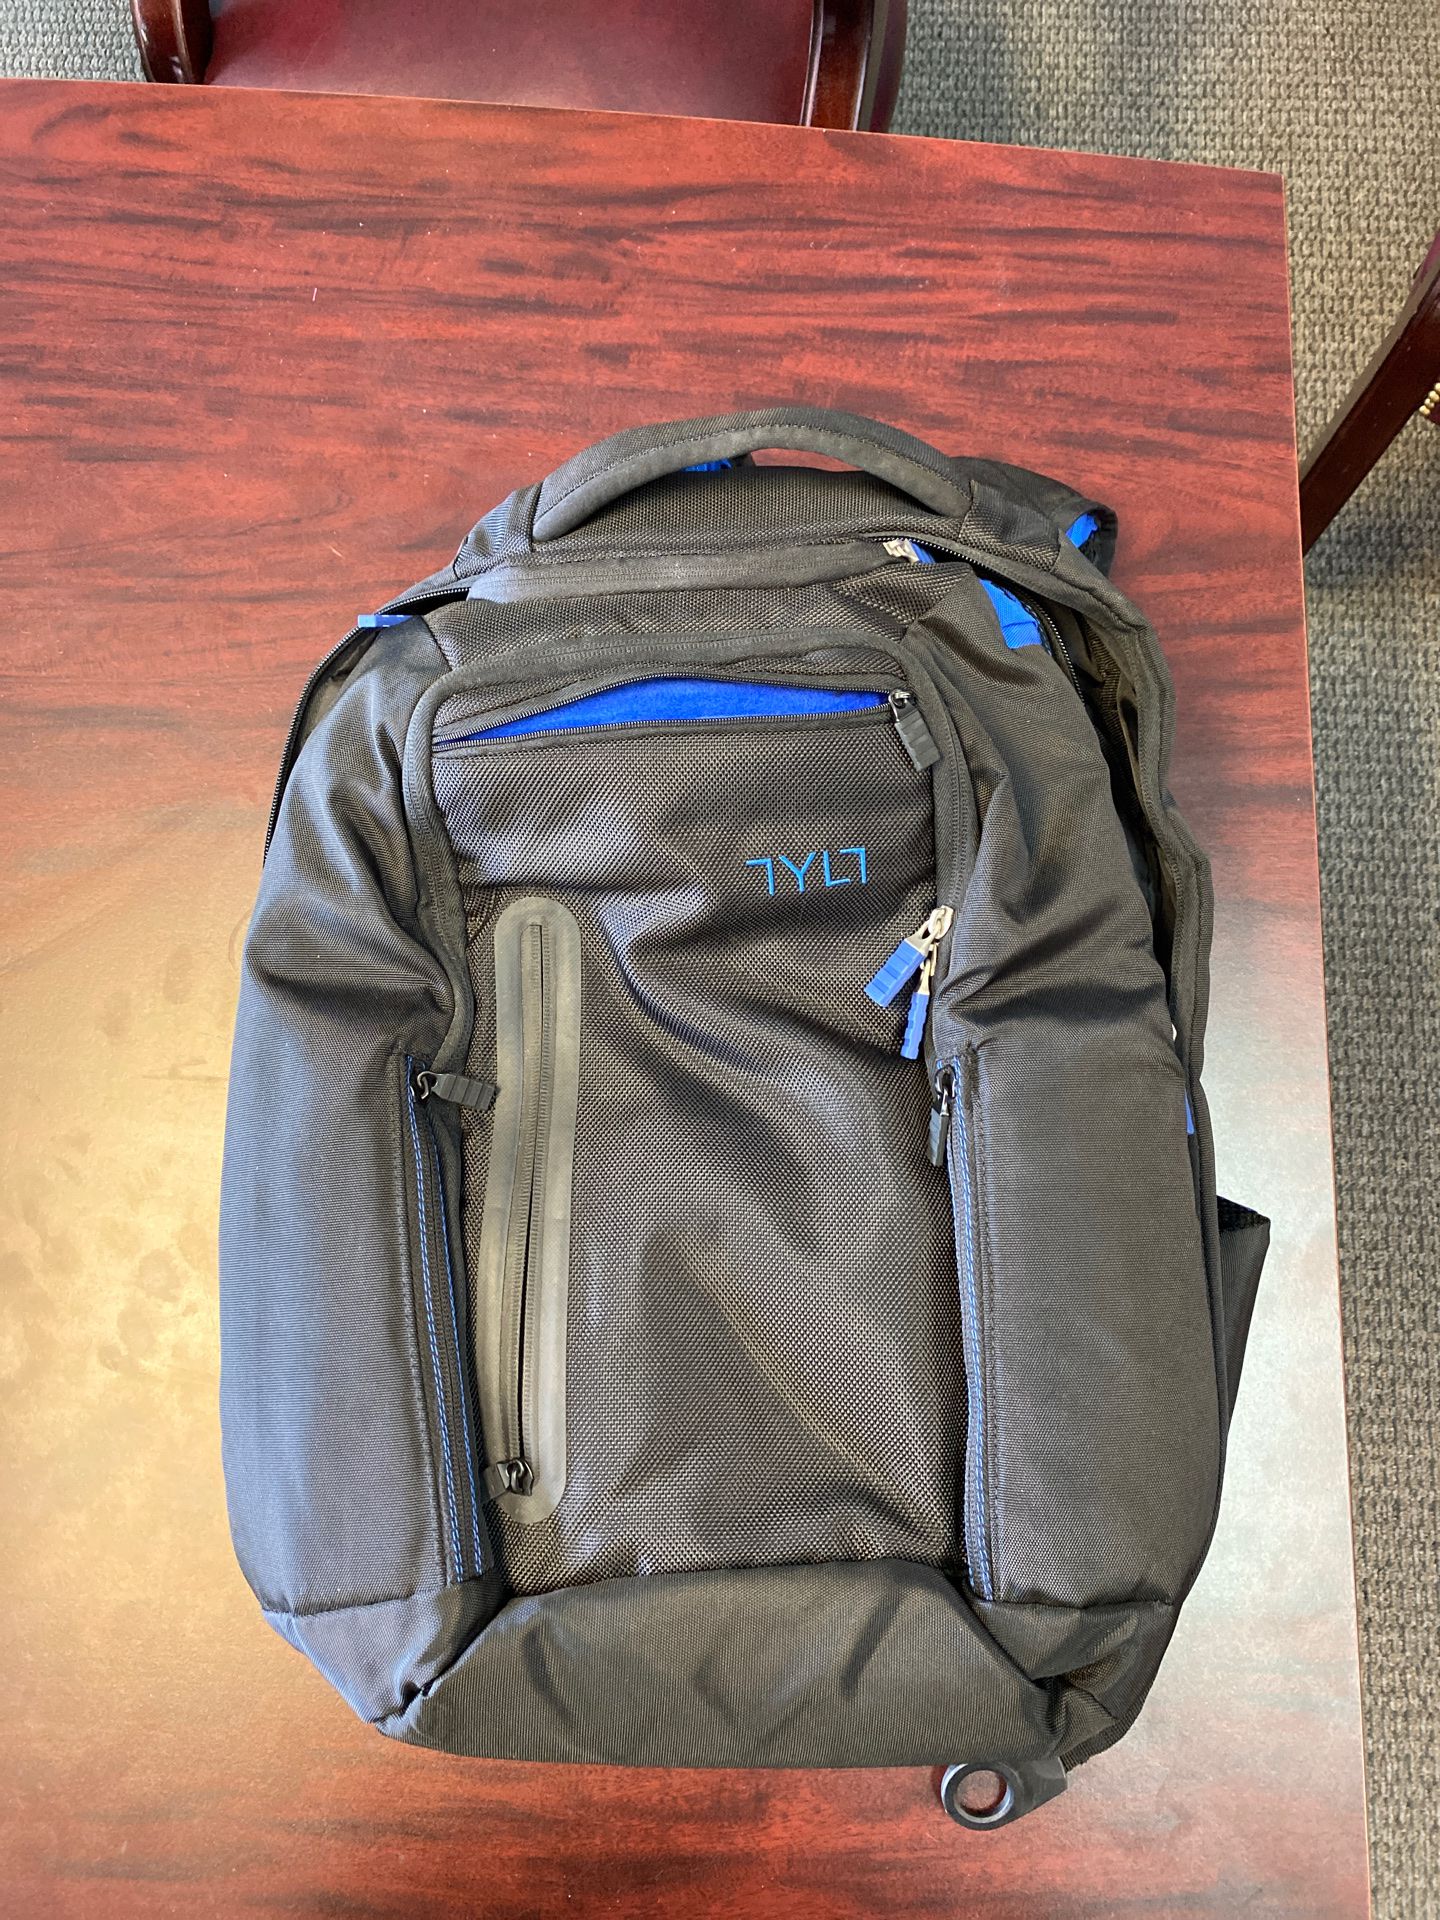 TYLT laptop backpack new!!!